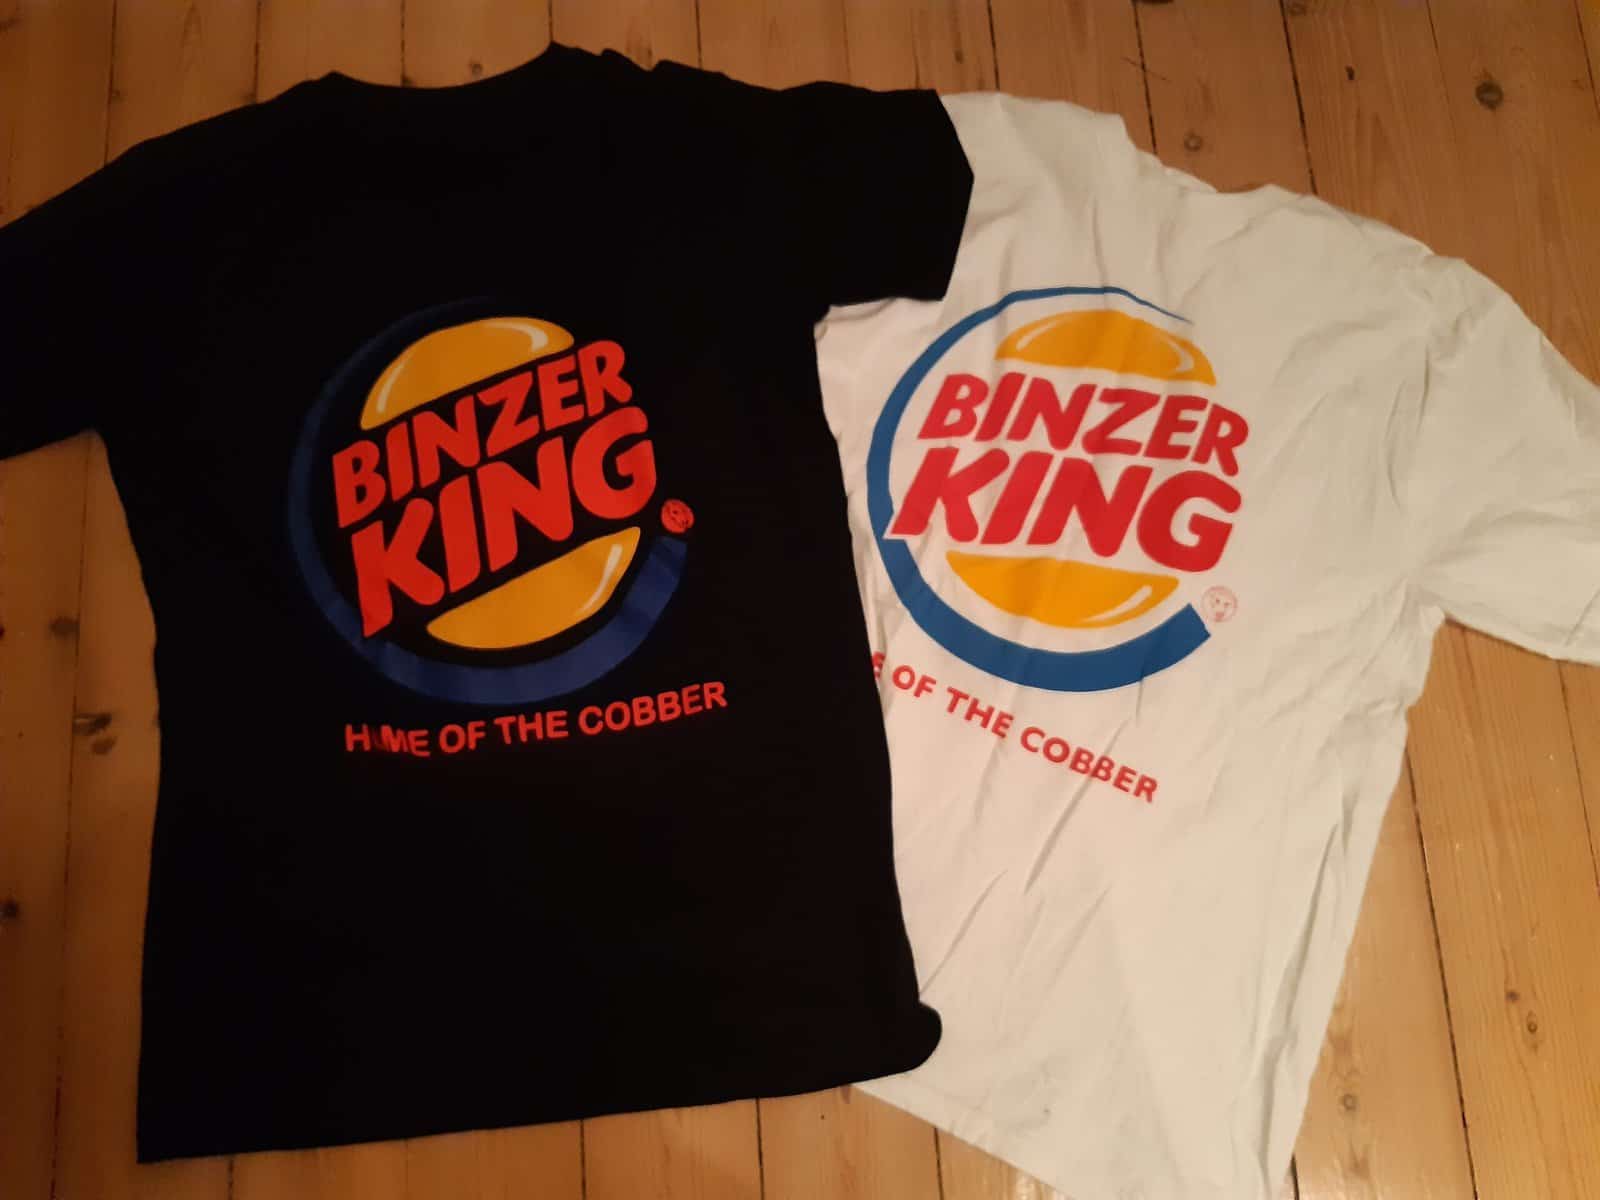 BINZER KING T-SHIRT, 2019